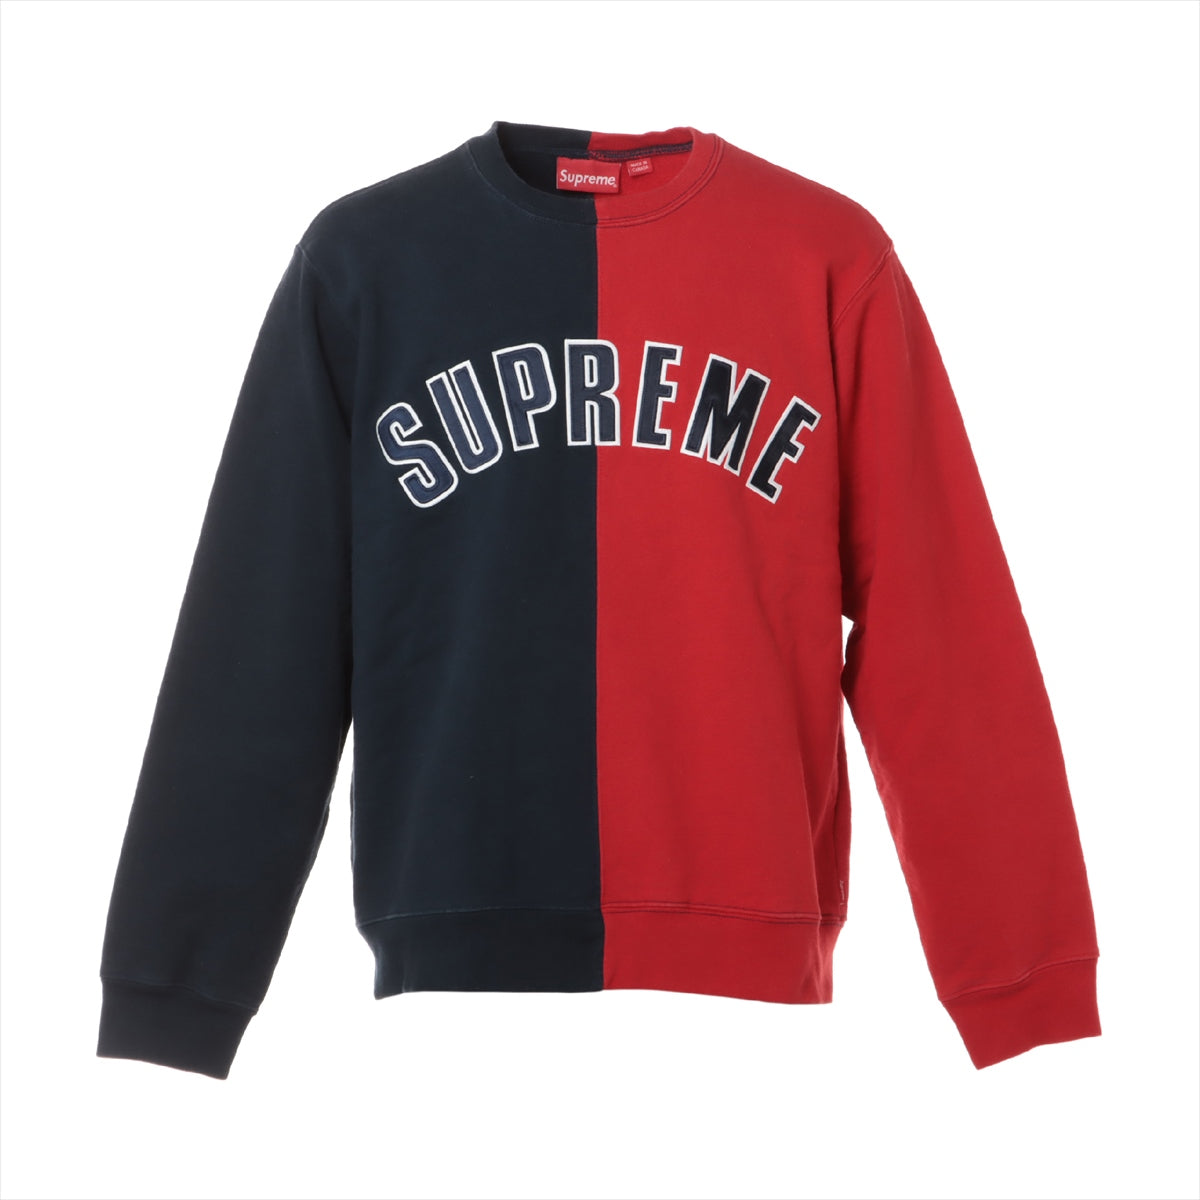 M 紺 赤 supreme split crewneck sweatshirt